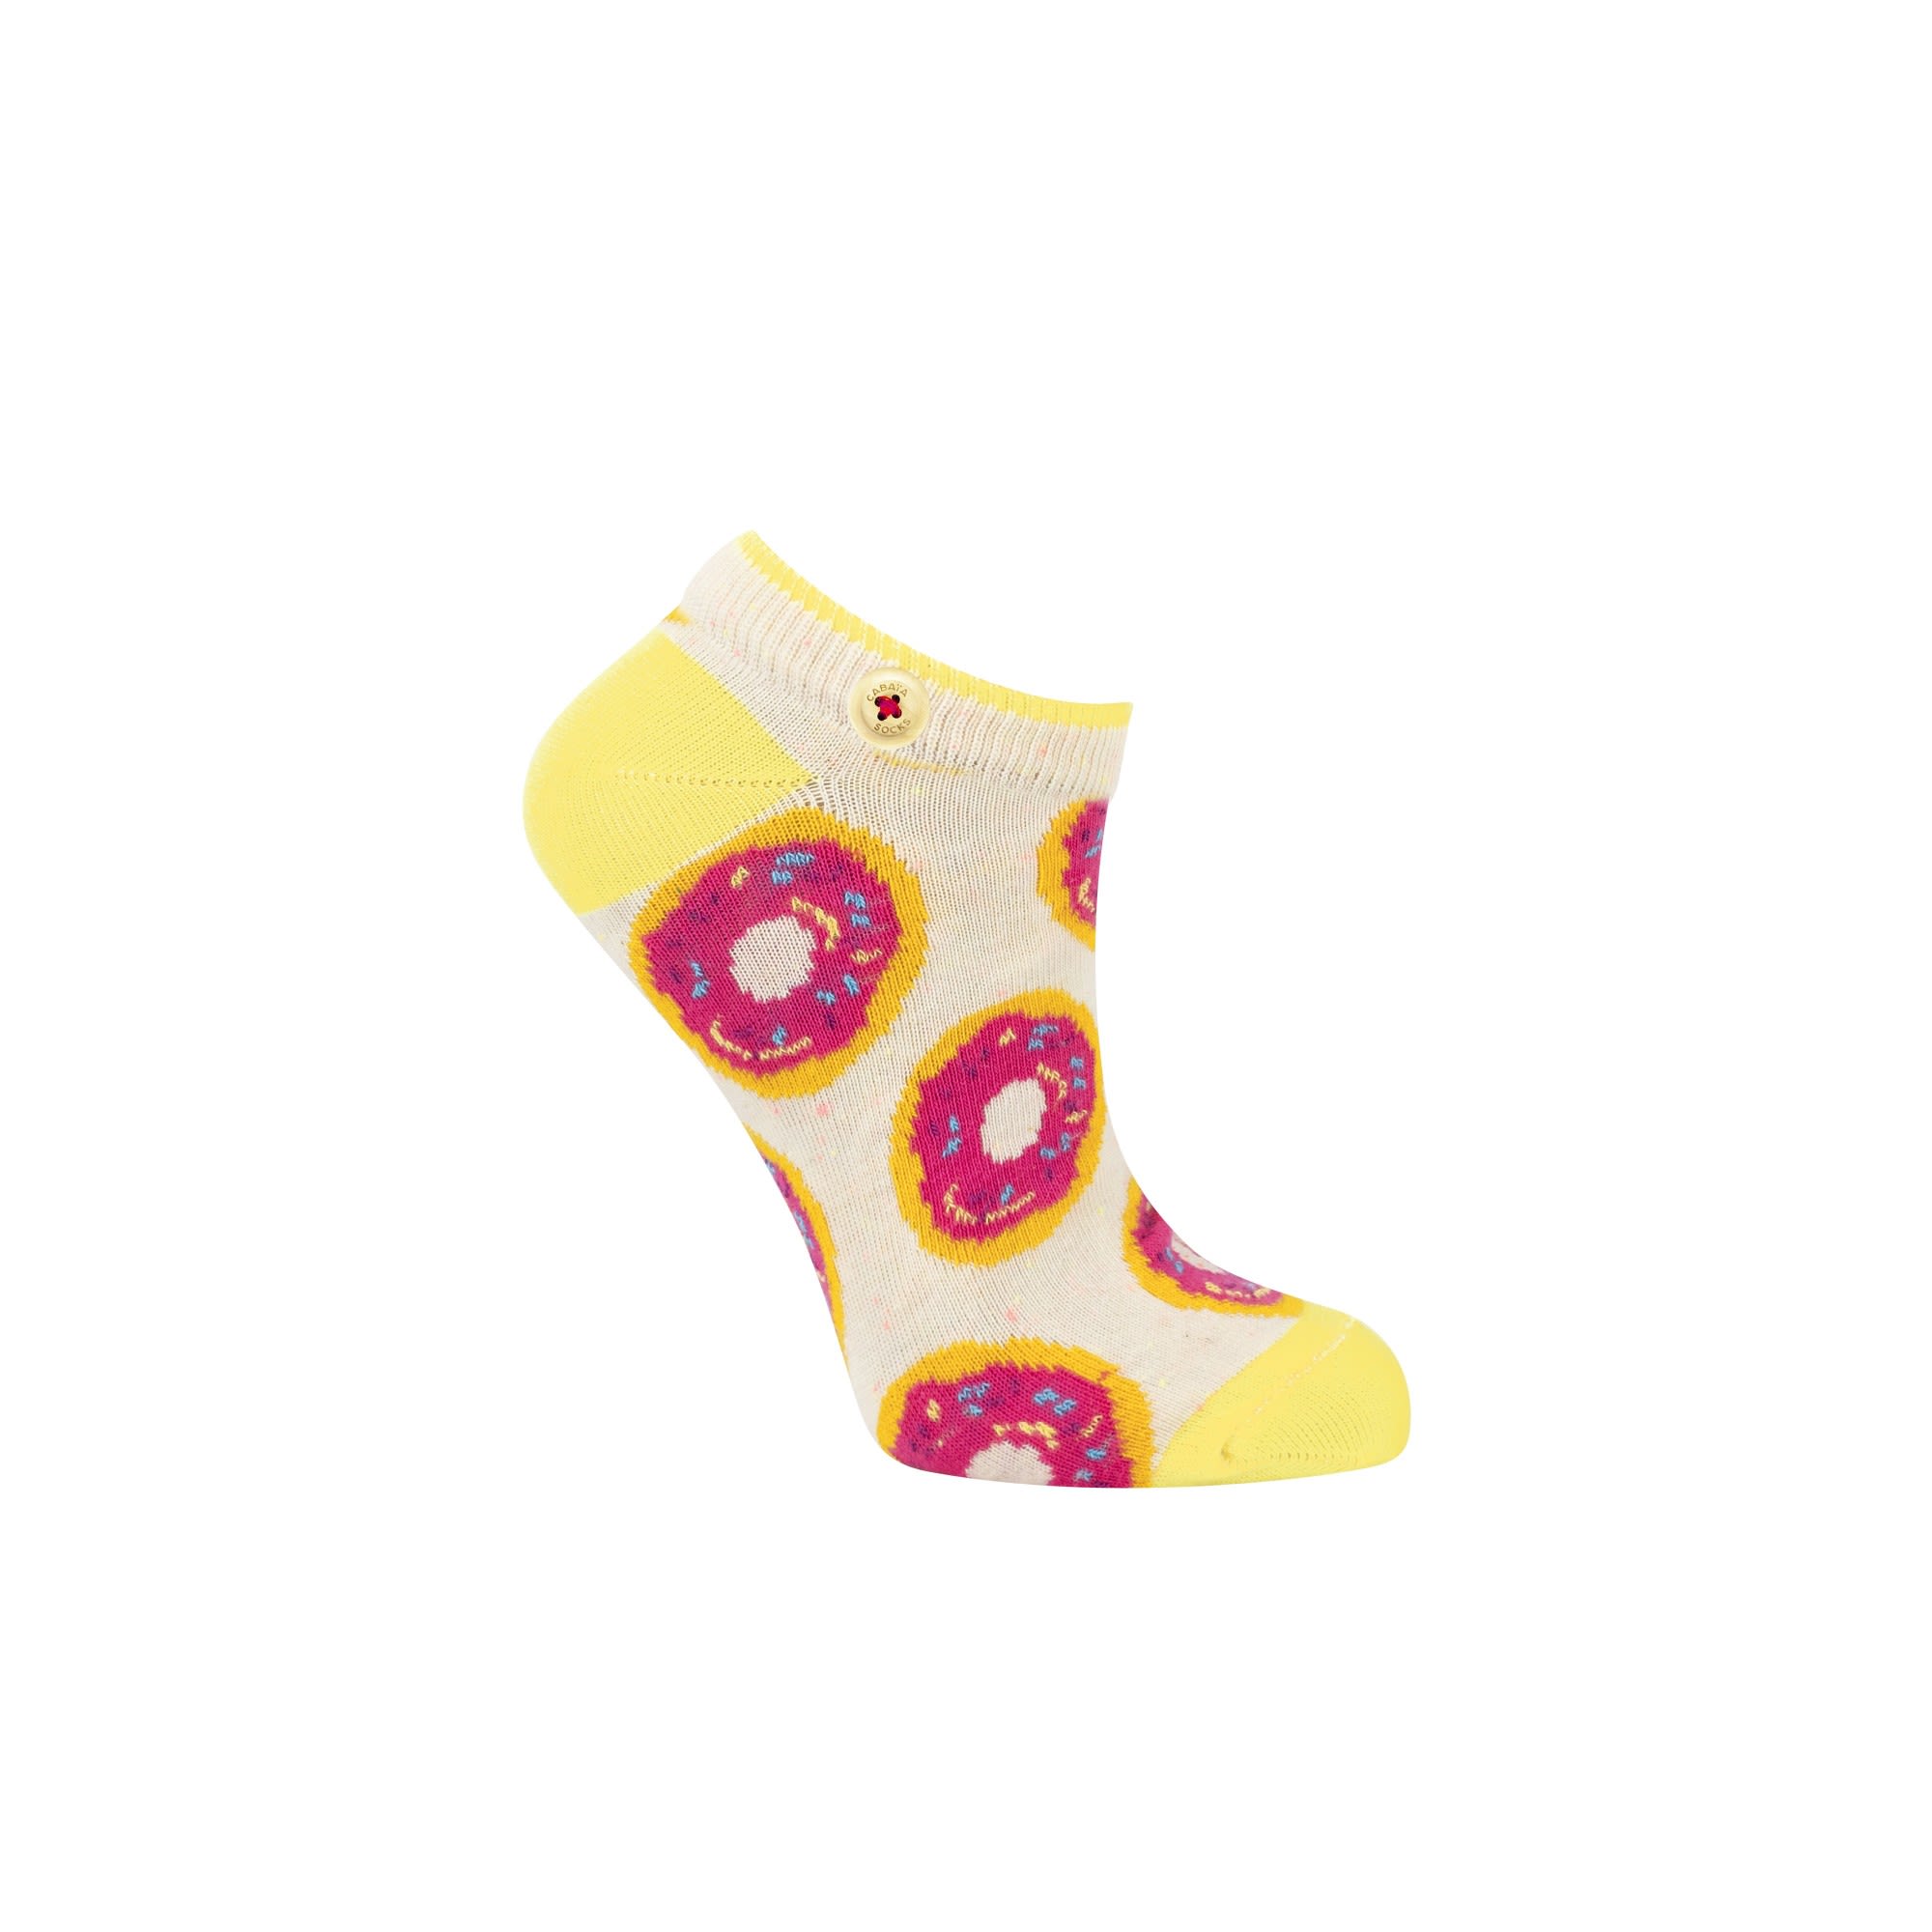 Cabaia Weiche bequeme Damen Socken Yellow - Kollektion 2020